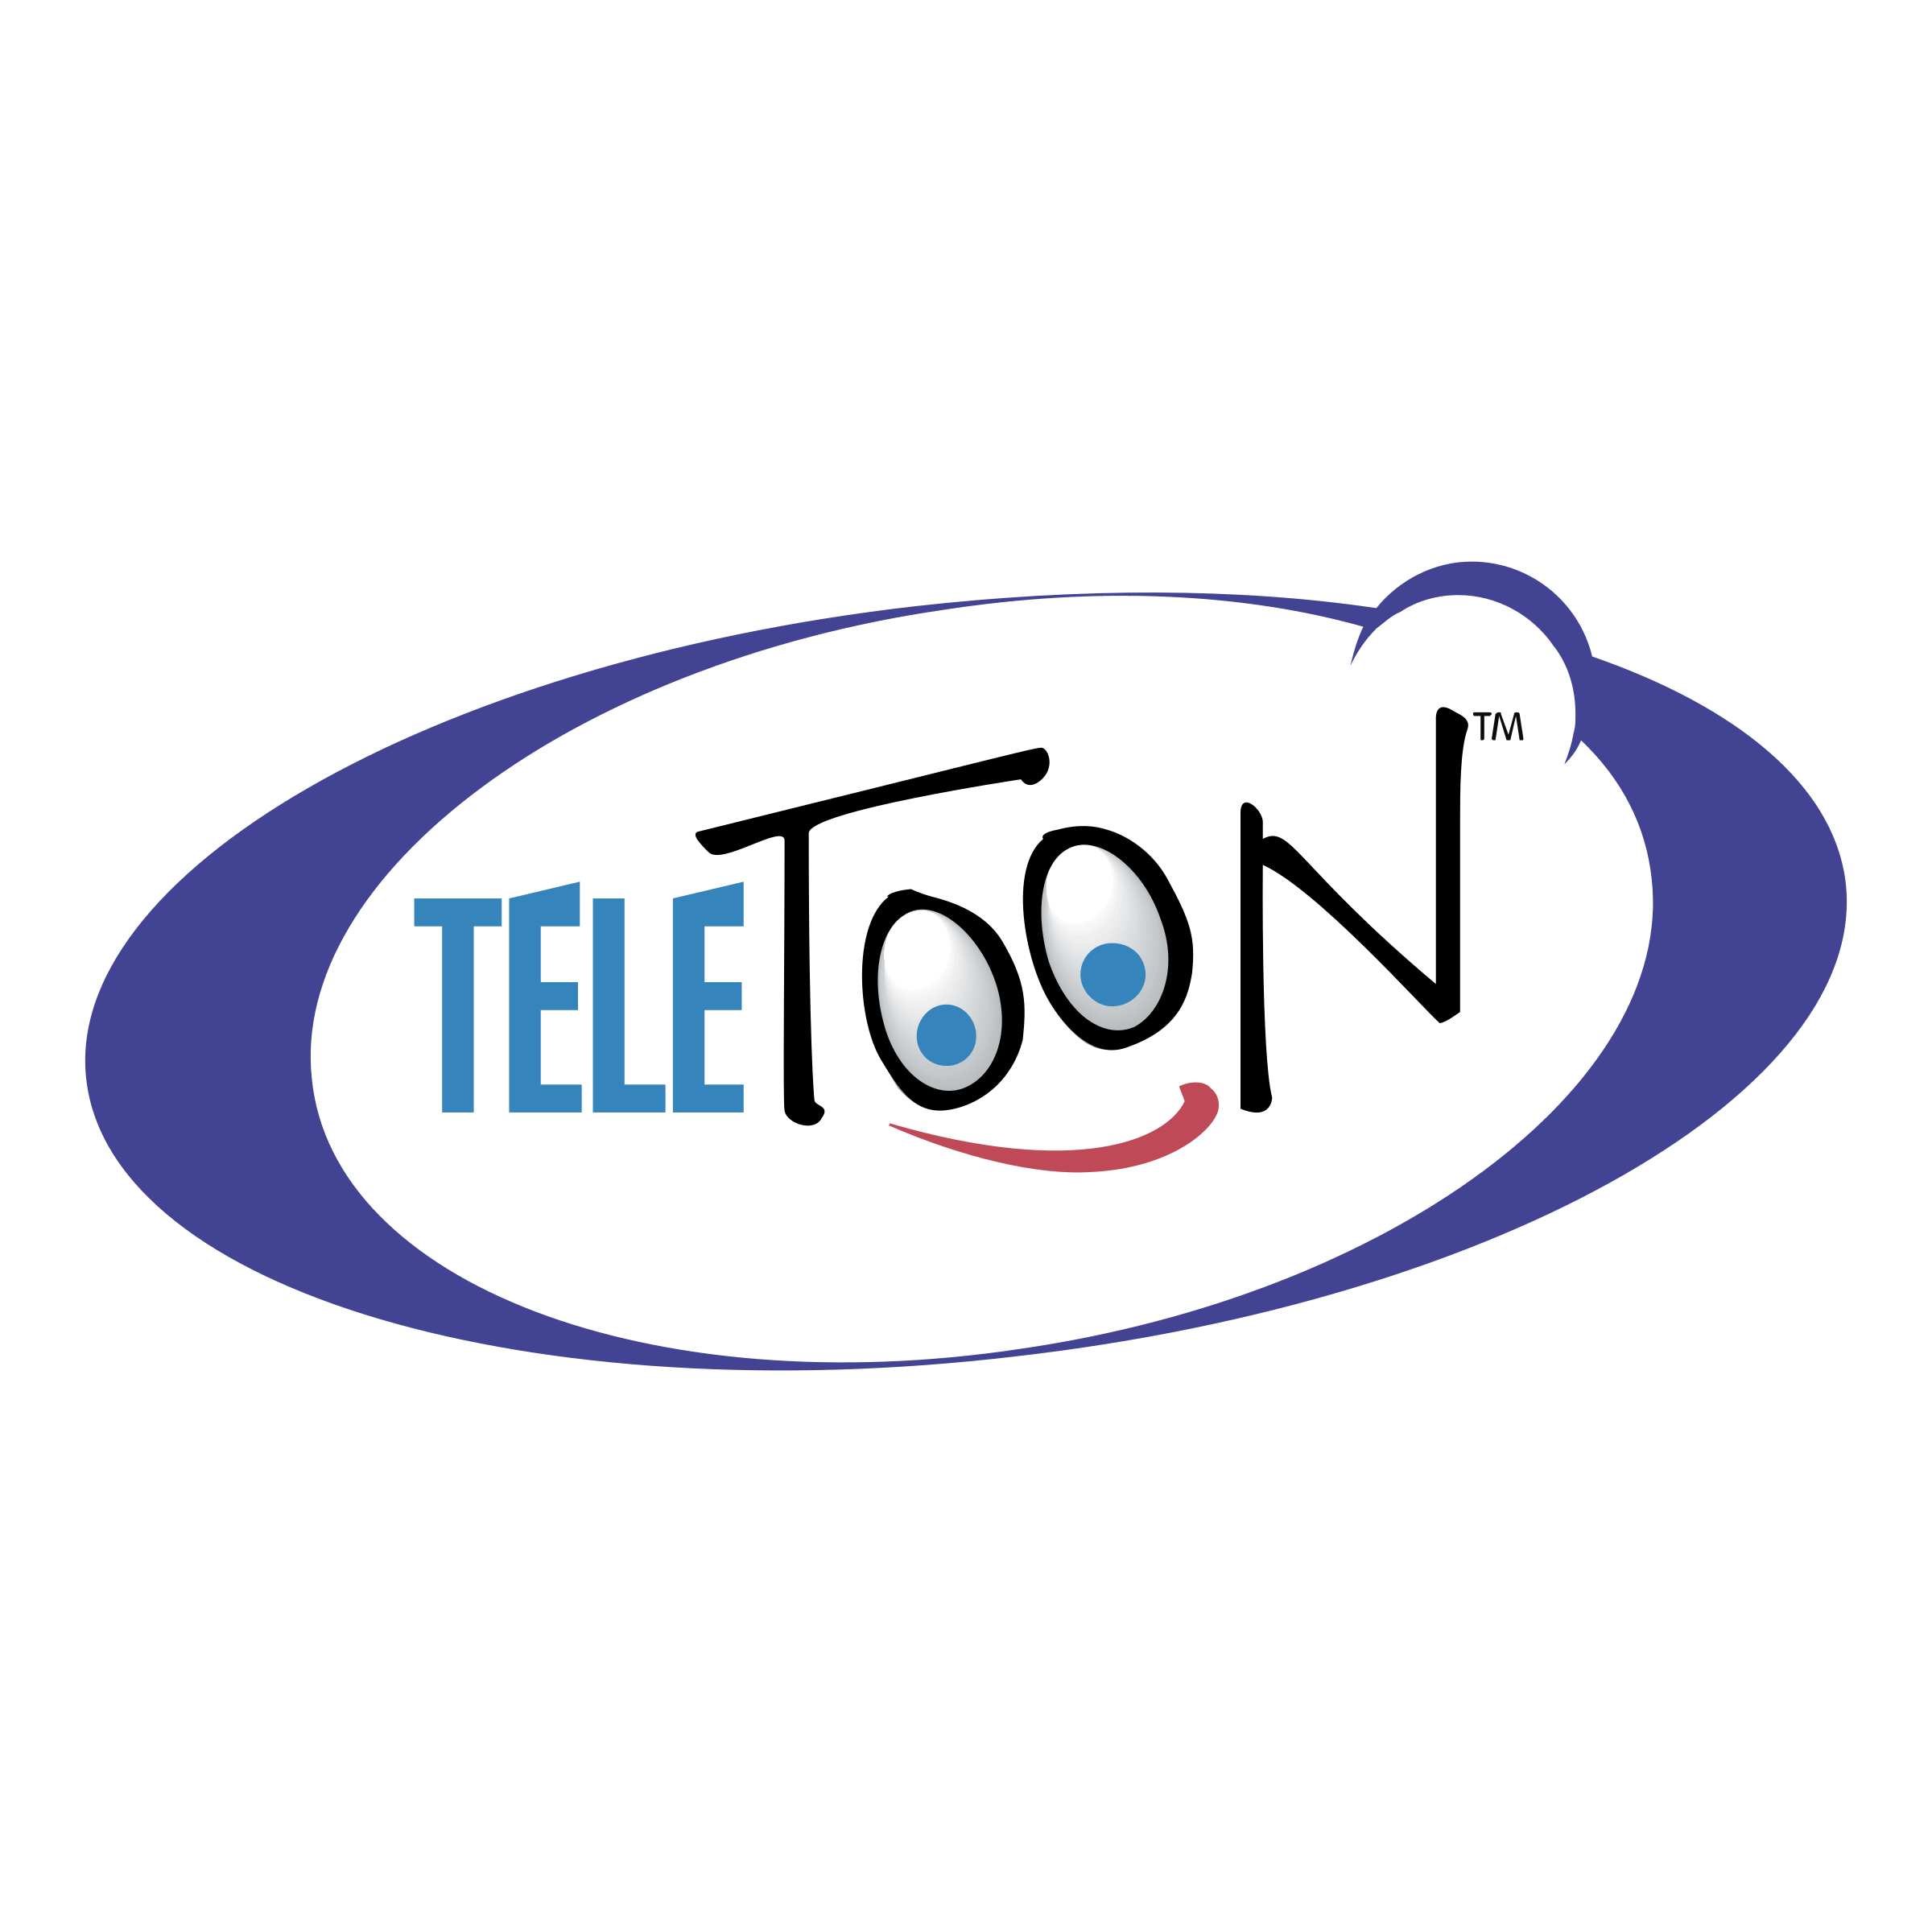 Teletoon Logo - Teletoon Logo PNG Transparent & SVG Vector - Freebie Supply